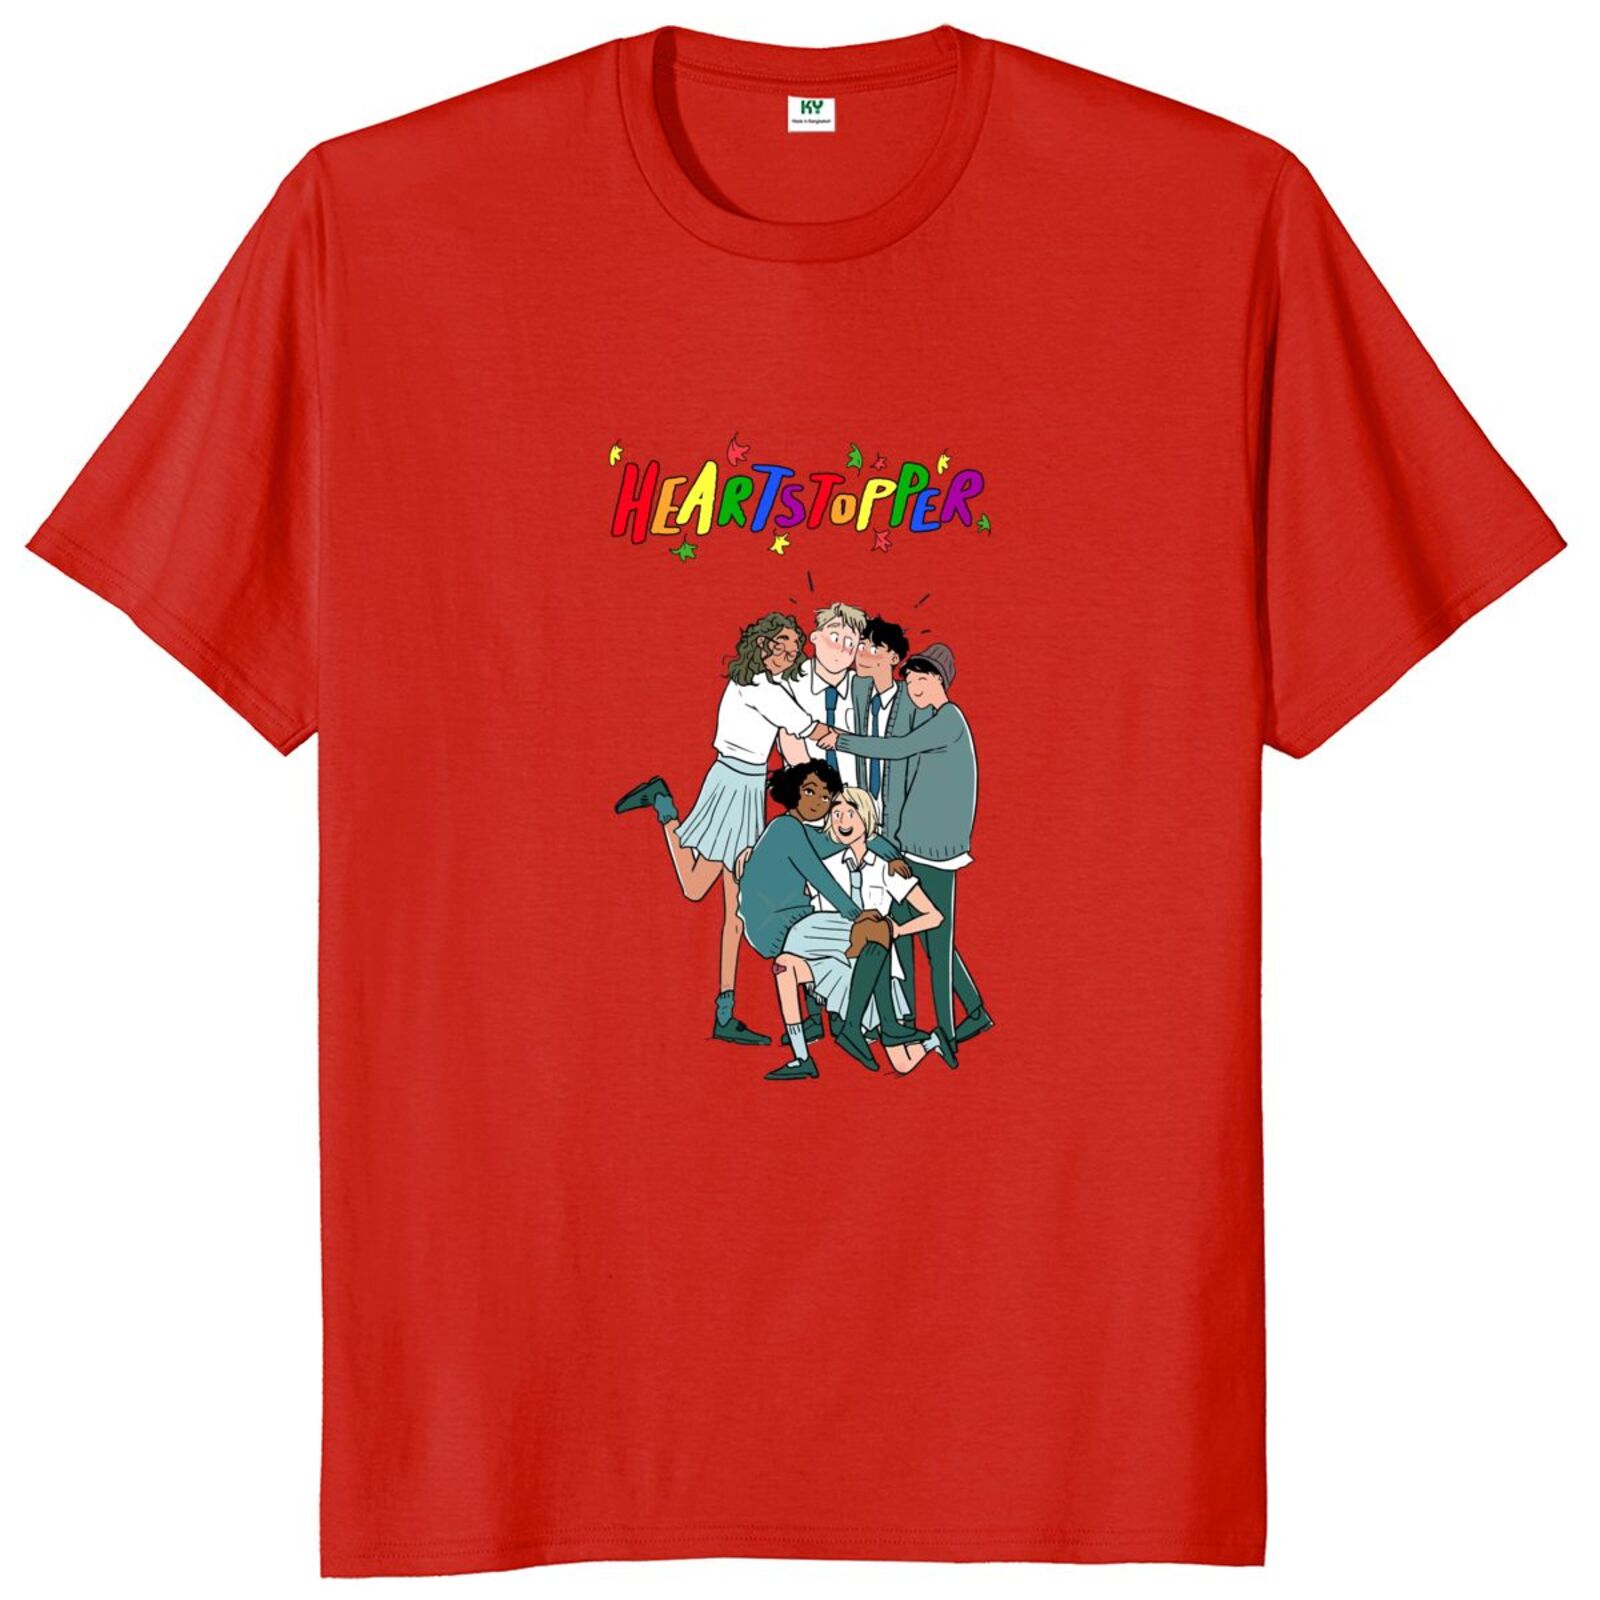 heartstoppers anime t shirt lgbtq+ drama tv series classic tshirt novelty gift for manga comic fans lgbt pride unisex tee tops 4981